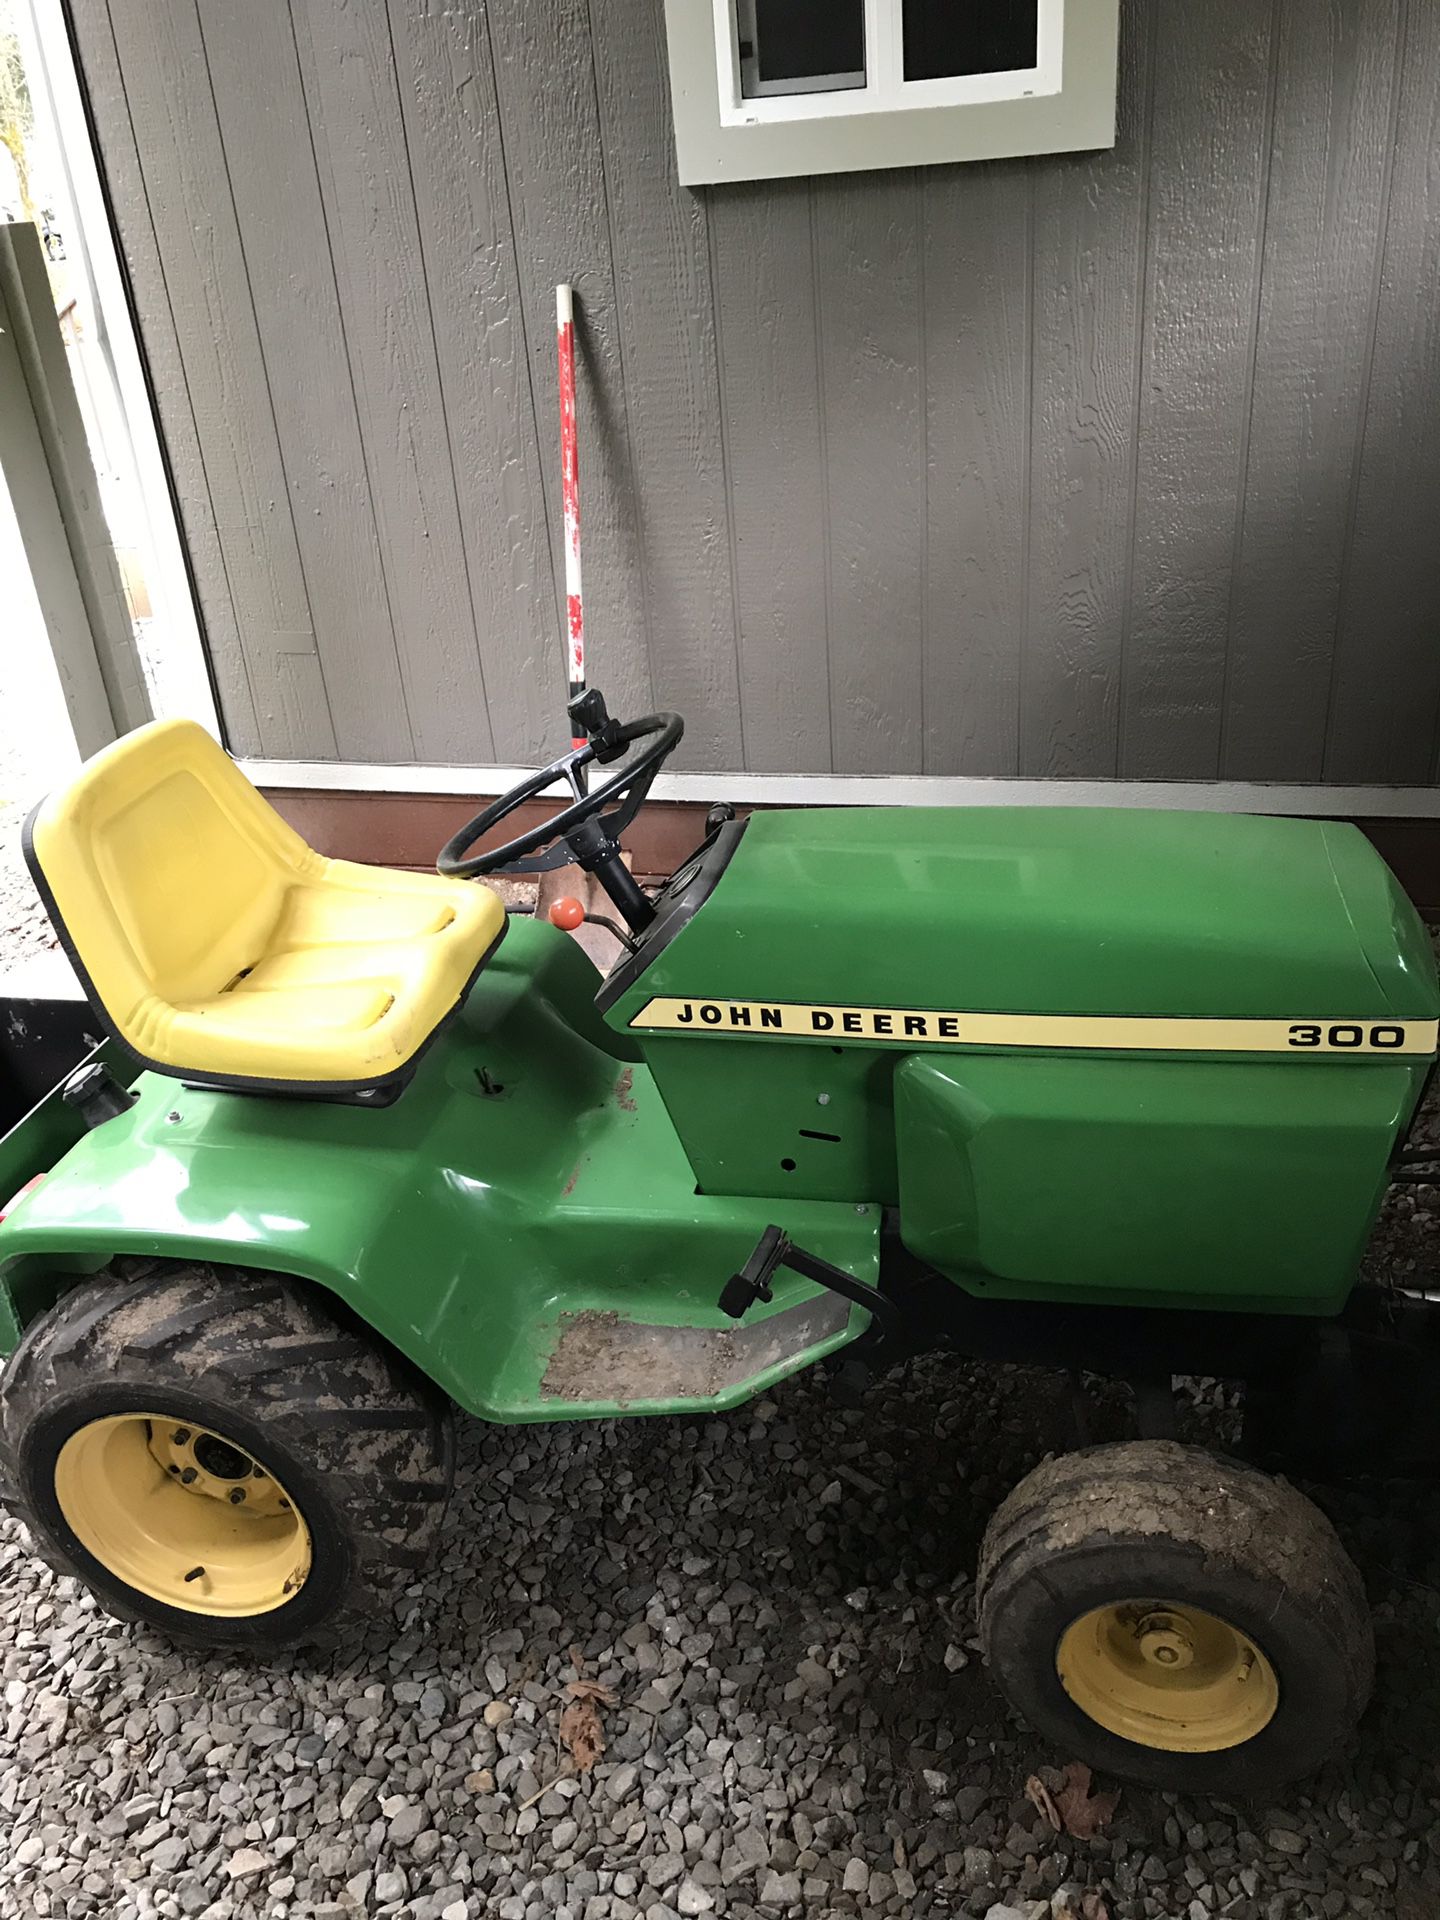 John Deere 300 yard tractor